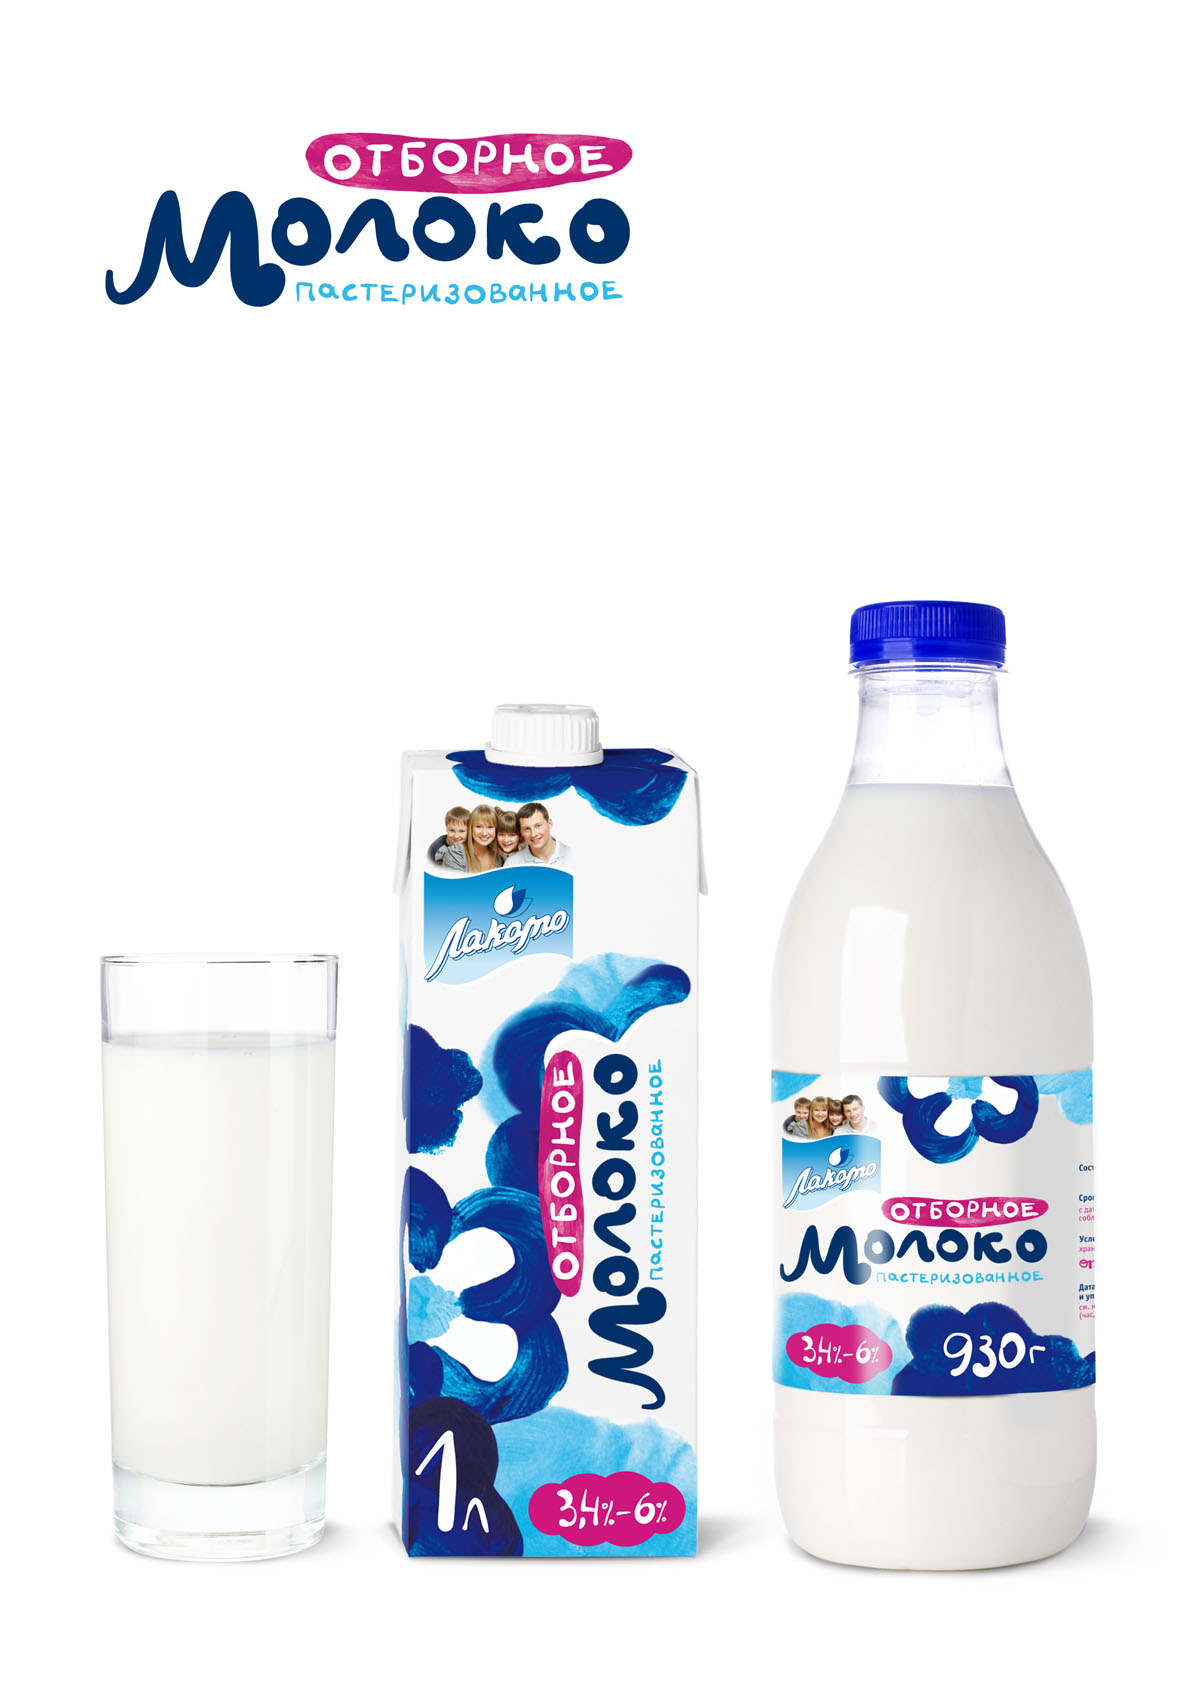 Дизайн упаковки молока "Лакомо" - Фото 3